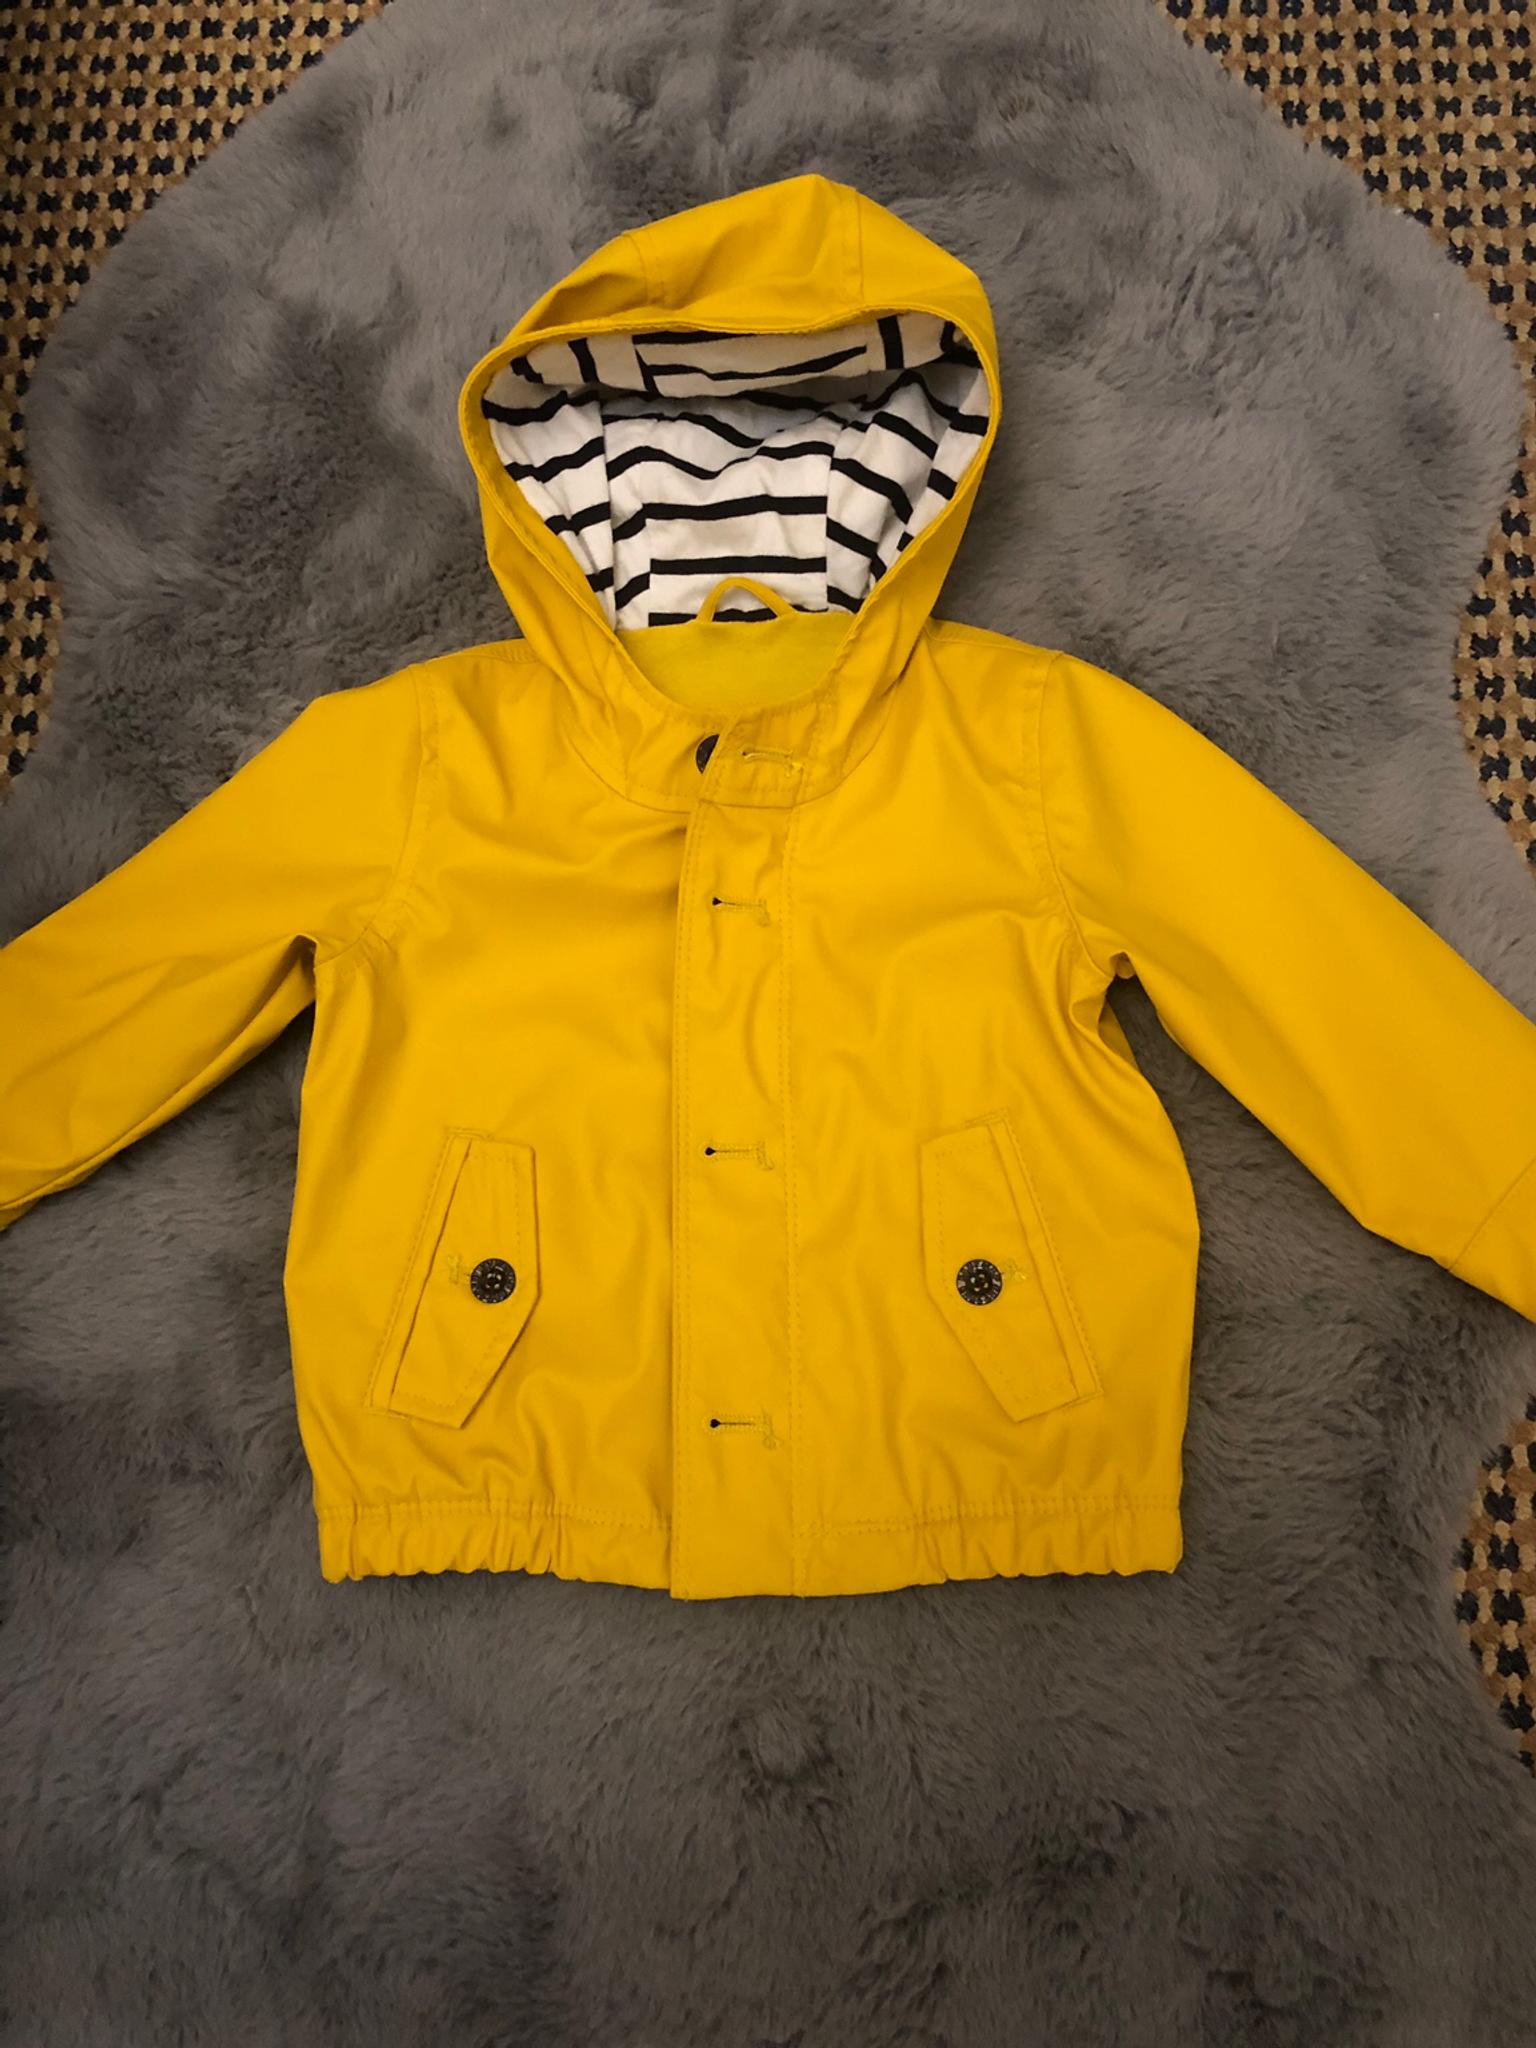 gap yellow jacket